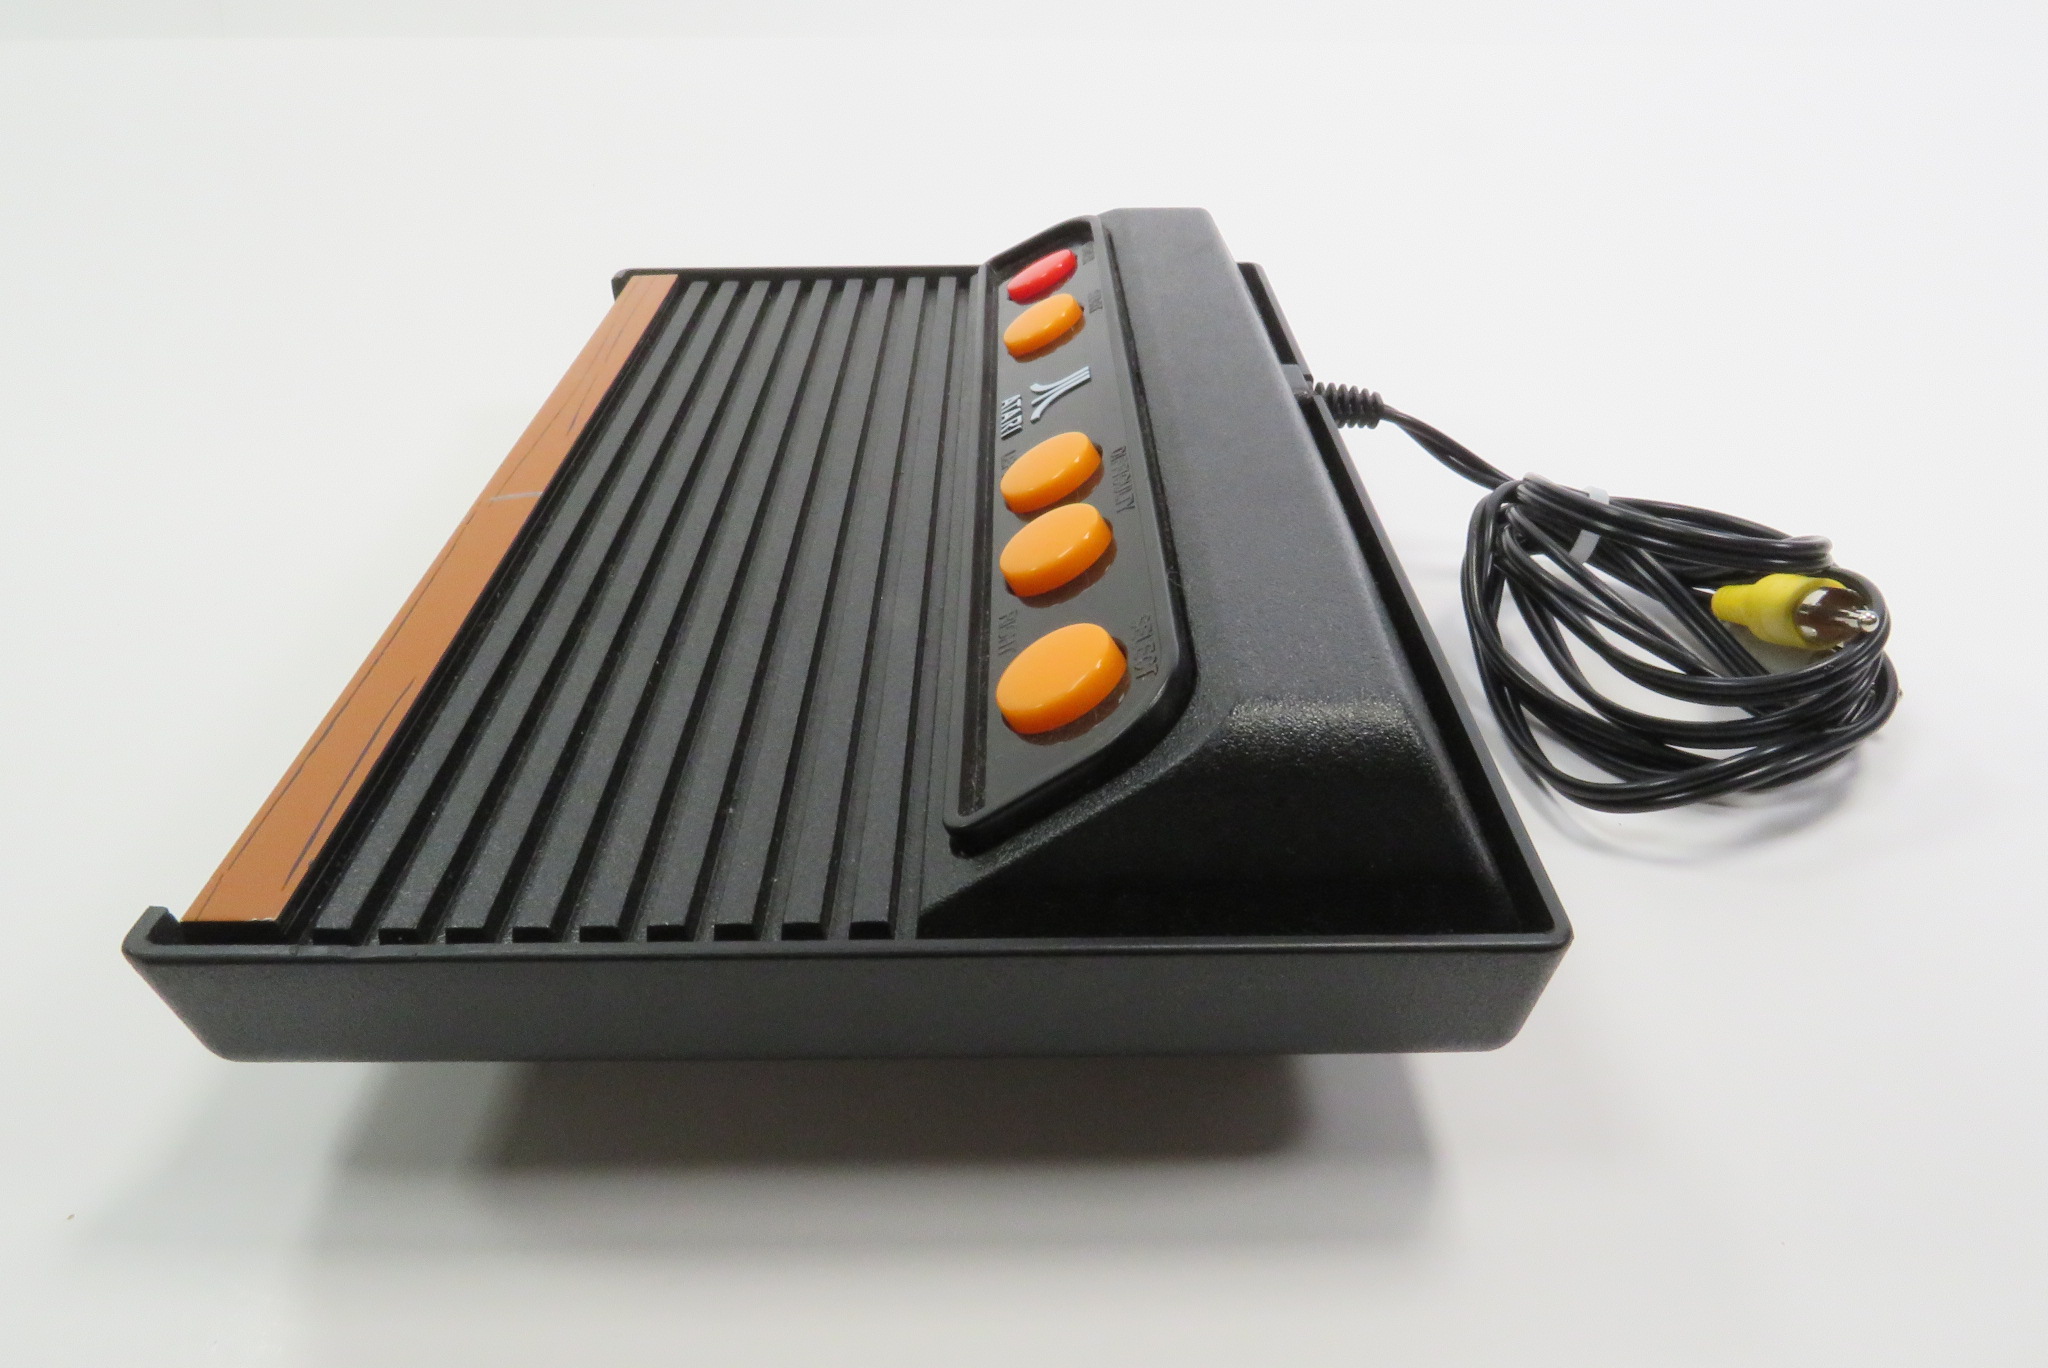  Atari Flashback 2 Game Console